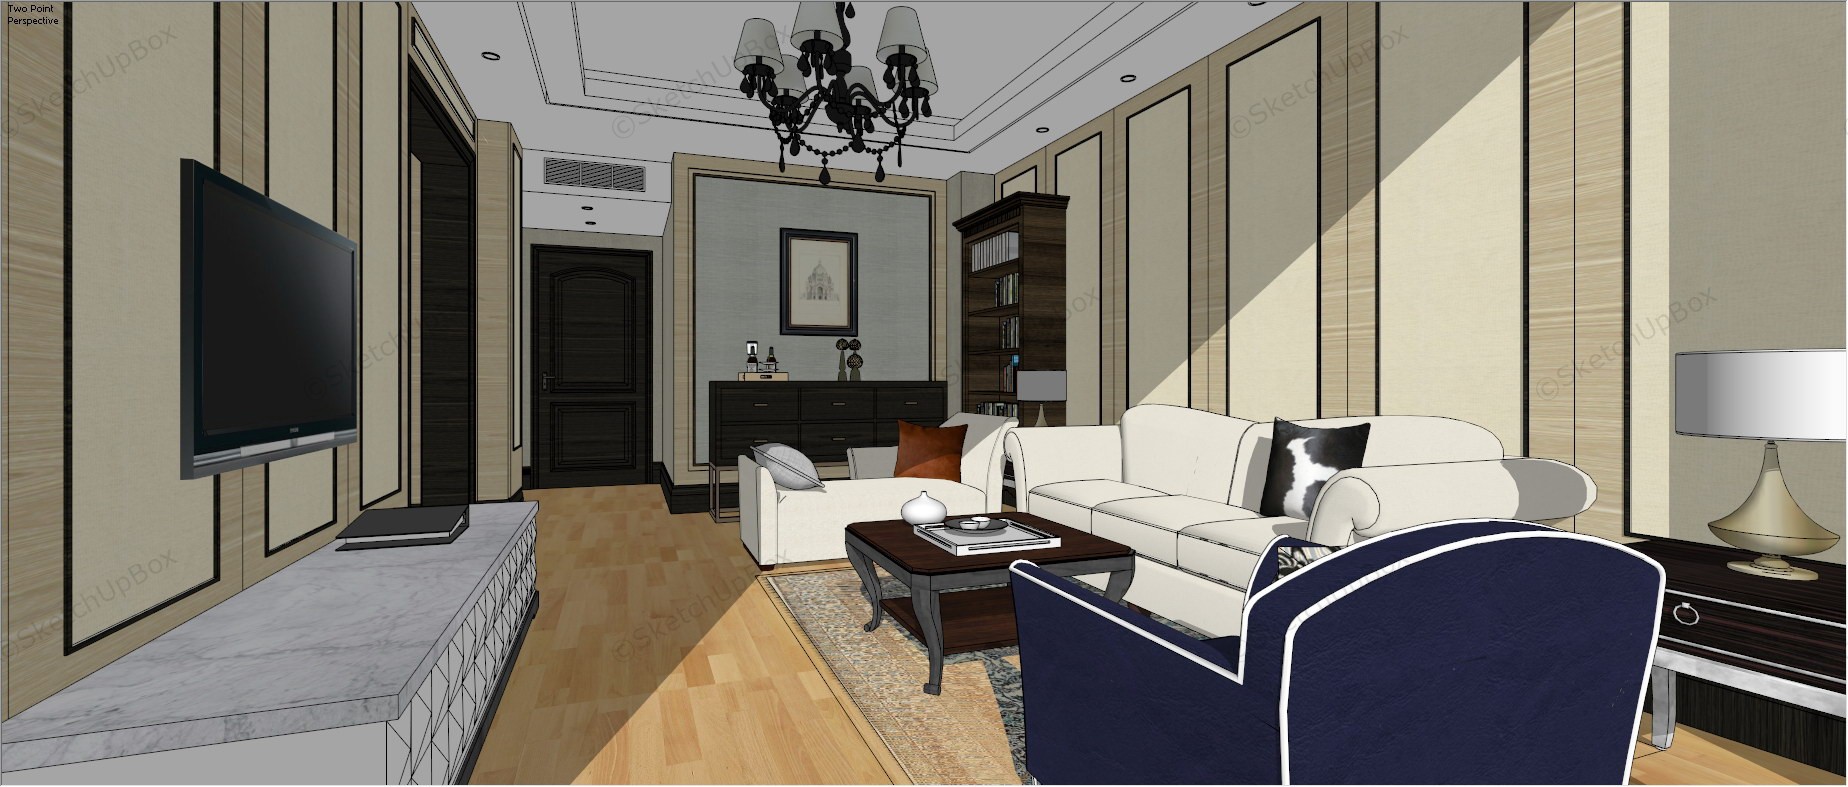 Executive Suite Hotel Room Design sketchup model preview - SketchupBox